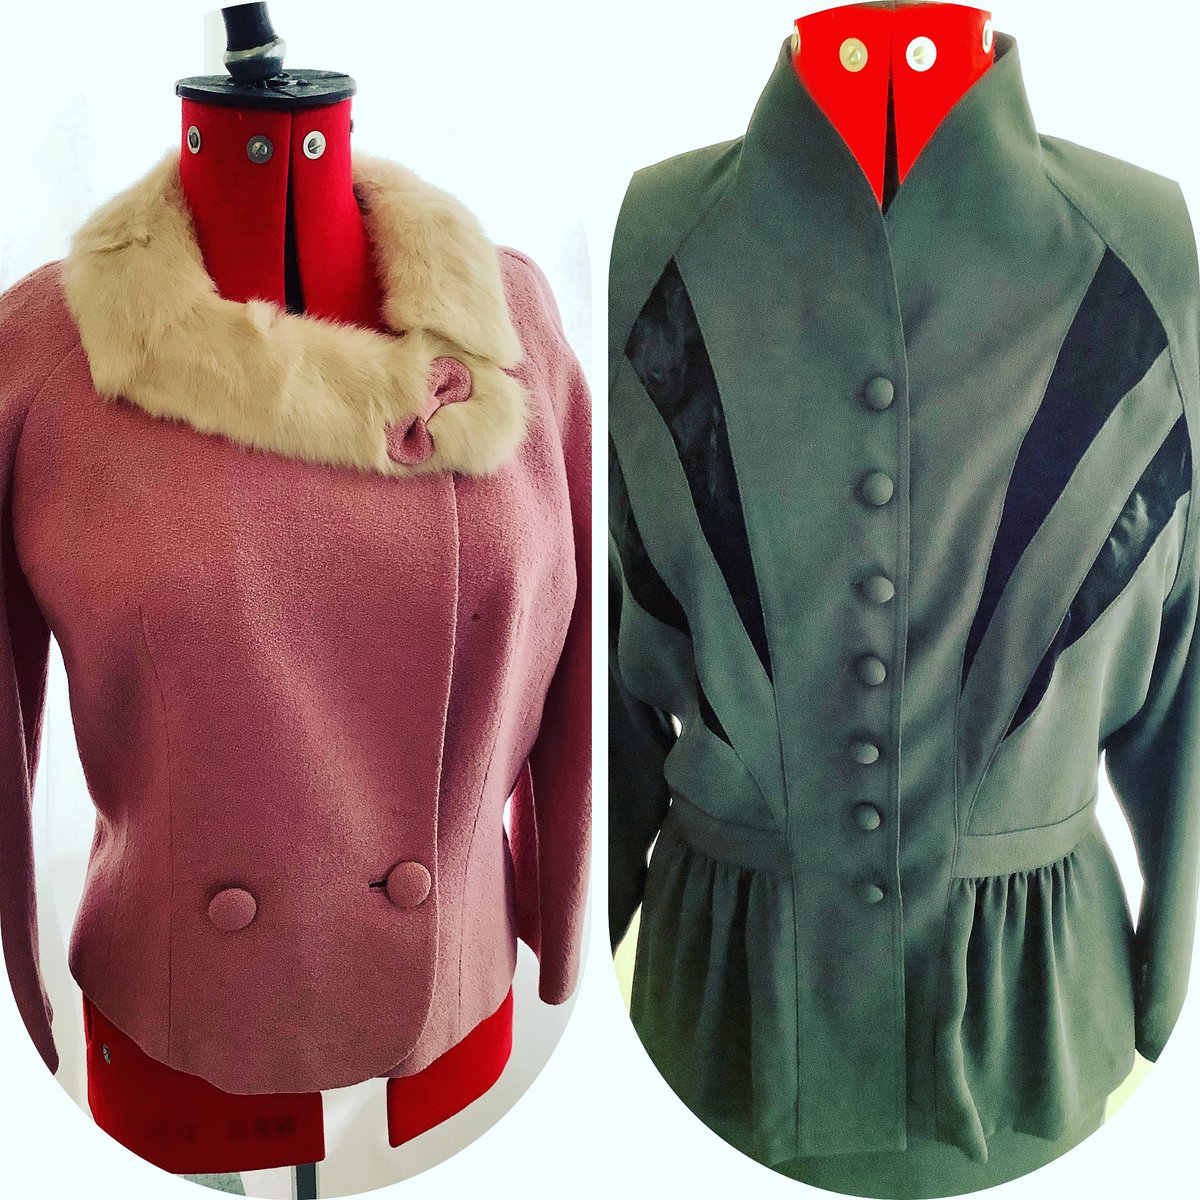 Sun 6th Sept is our first virtual vintage fair on Instagram Sories, 11am-4pm @doyouvintage #creativebizhour #markethour #bexleyheathhour #londonhour #vintage #craft #40s #50s #60s #70s #80s #retro #midcentury #fashion #stylist